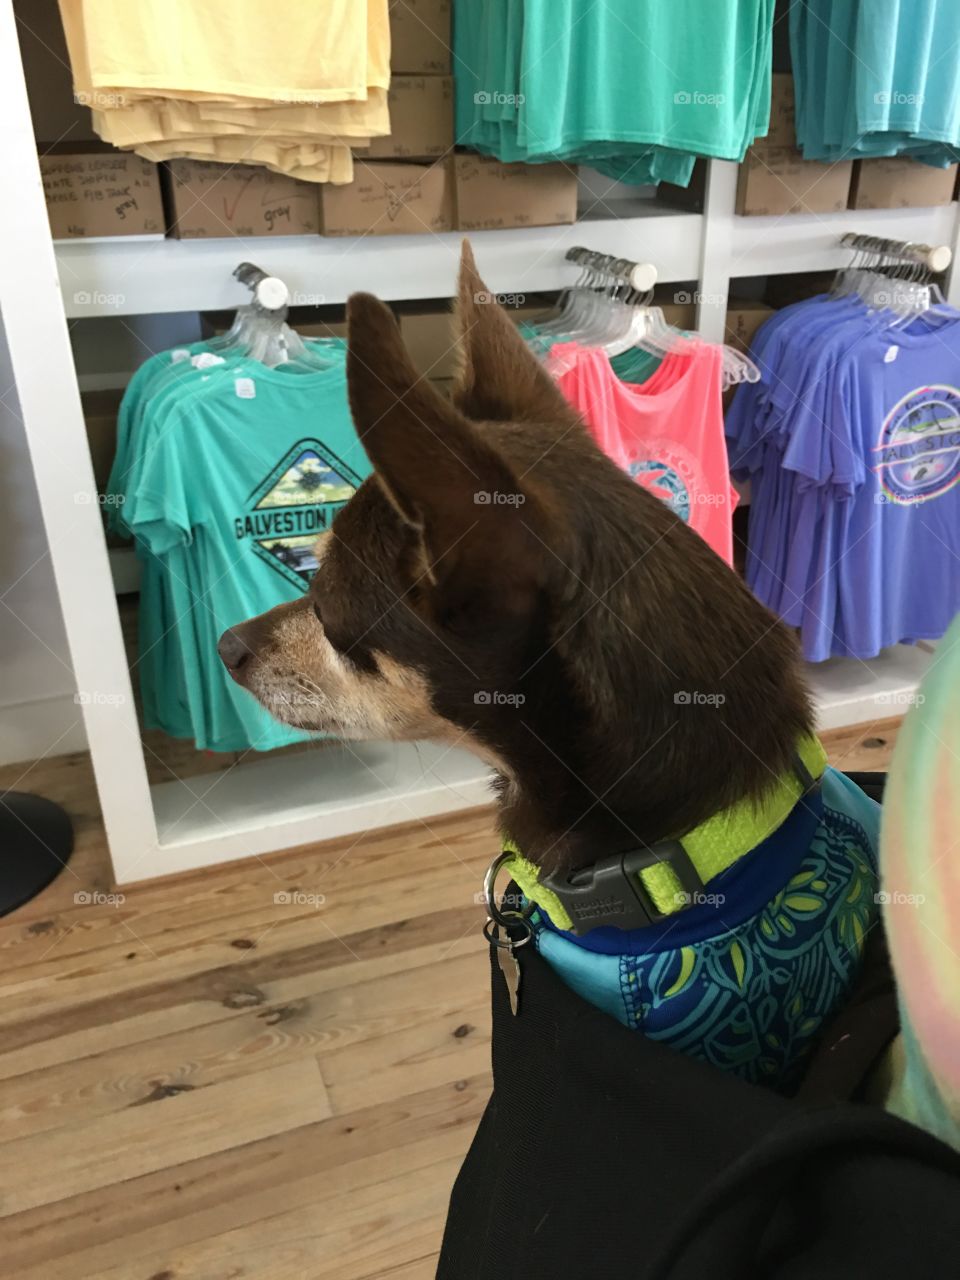 The tourist. Visiting chihuahua comes to Galveston Island, Texas. The island’s favorite souvenir shop at Murdock’s. 